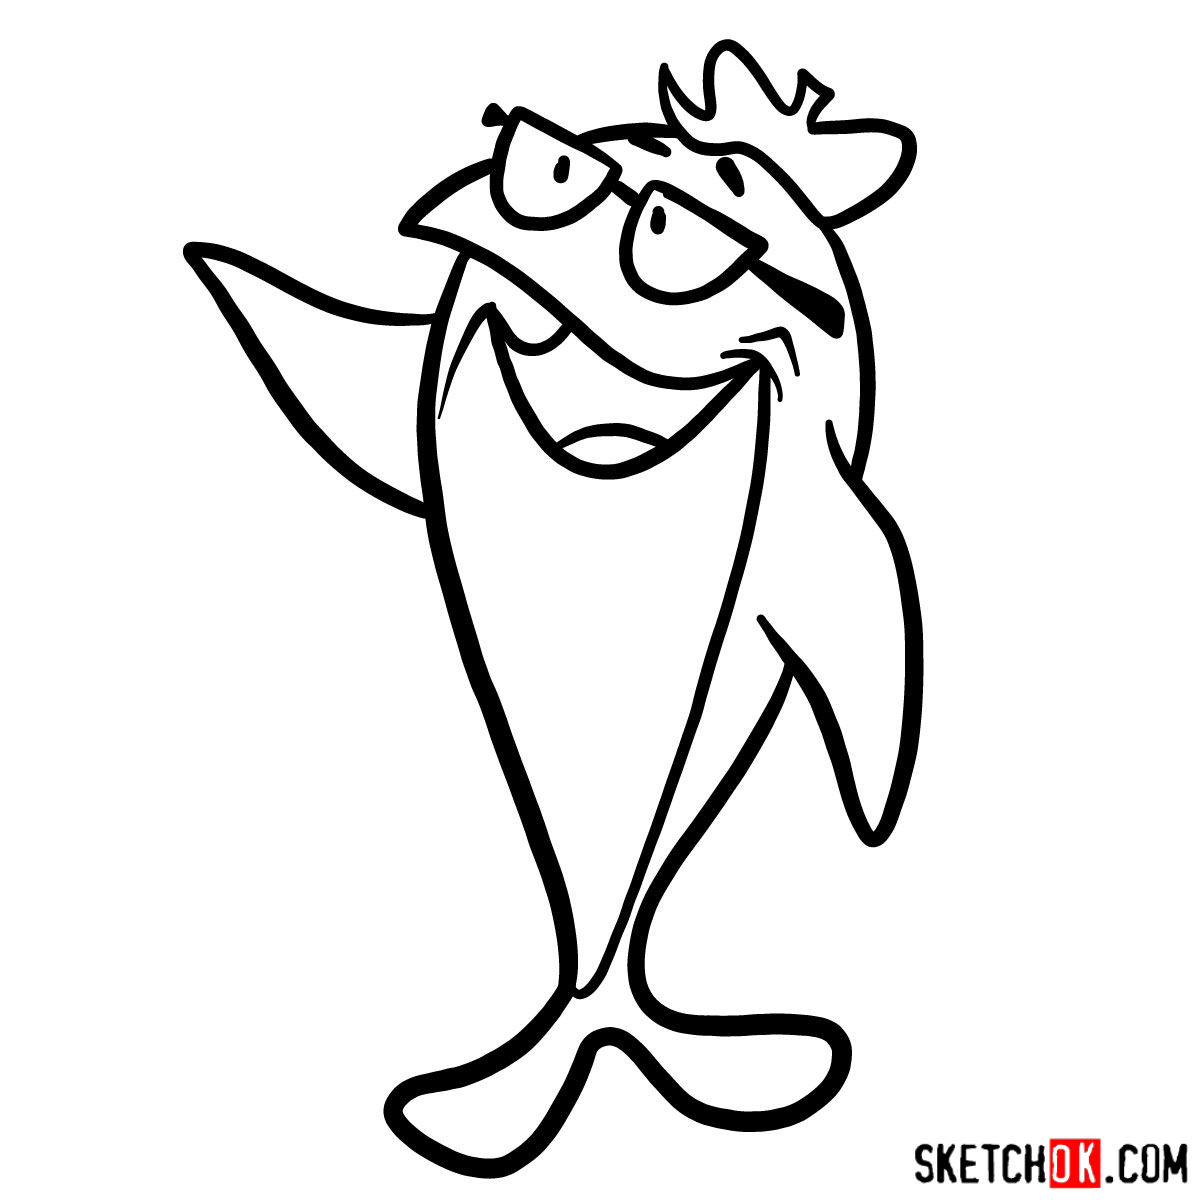 How to draw Charlie the Tuna - step 07